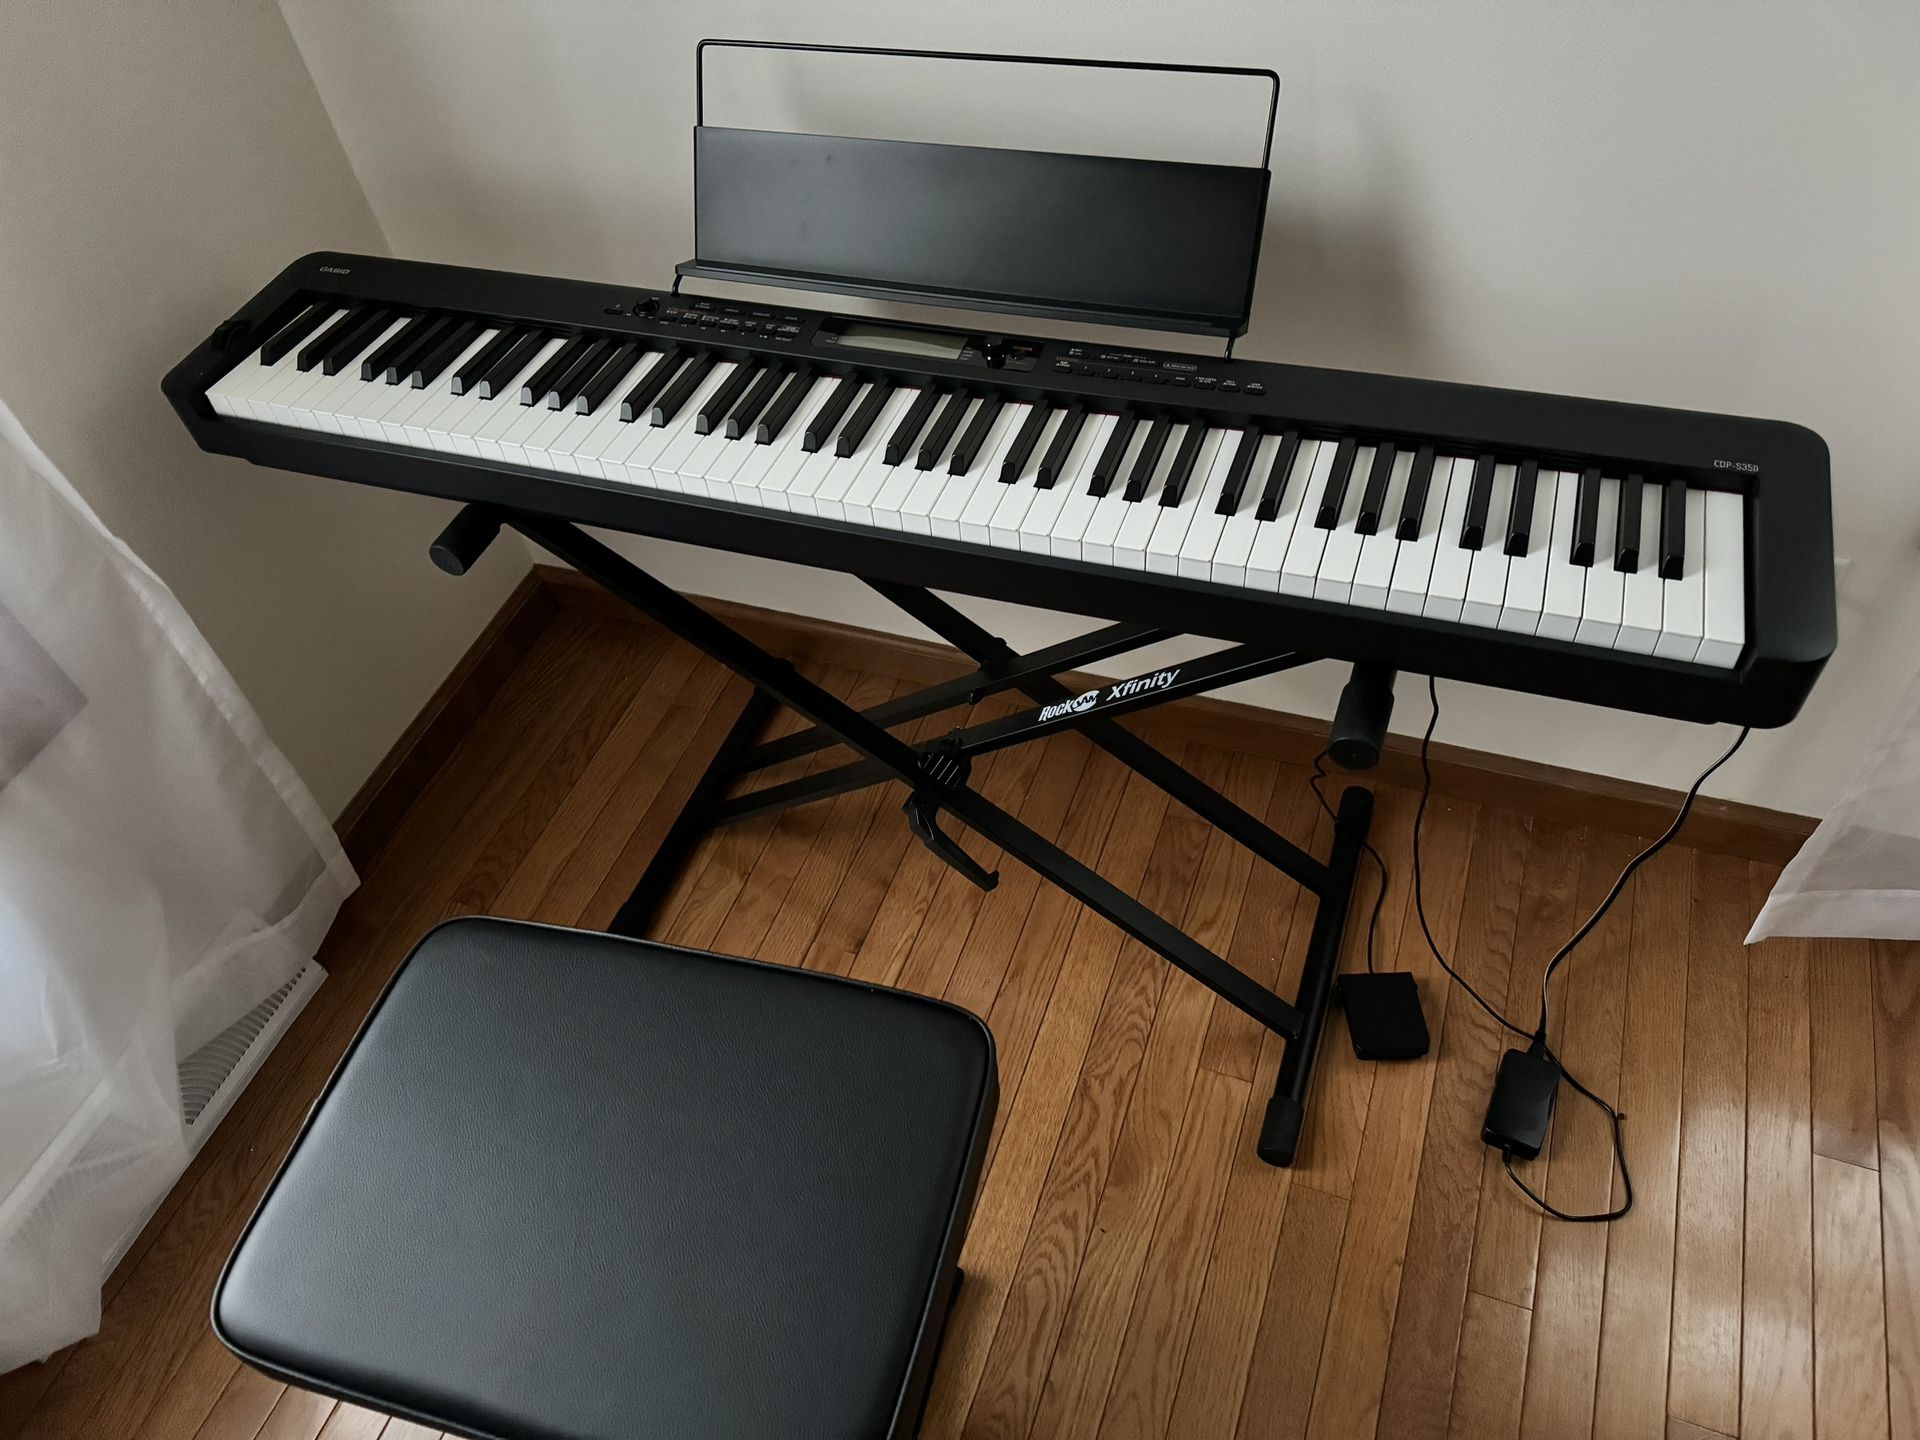 Casio Compact Digital Piano Electric Keyboard